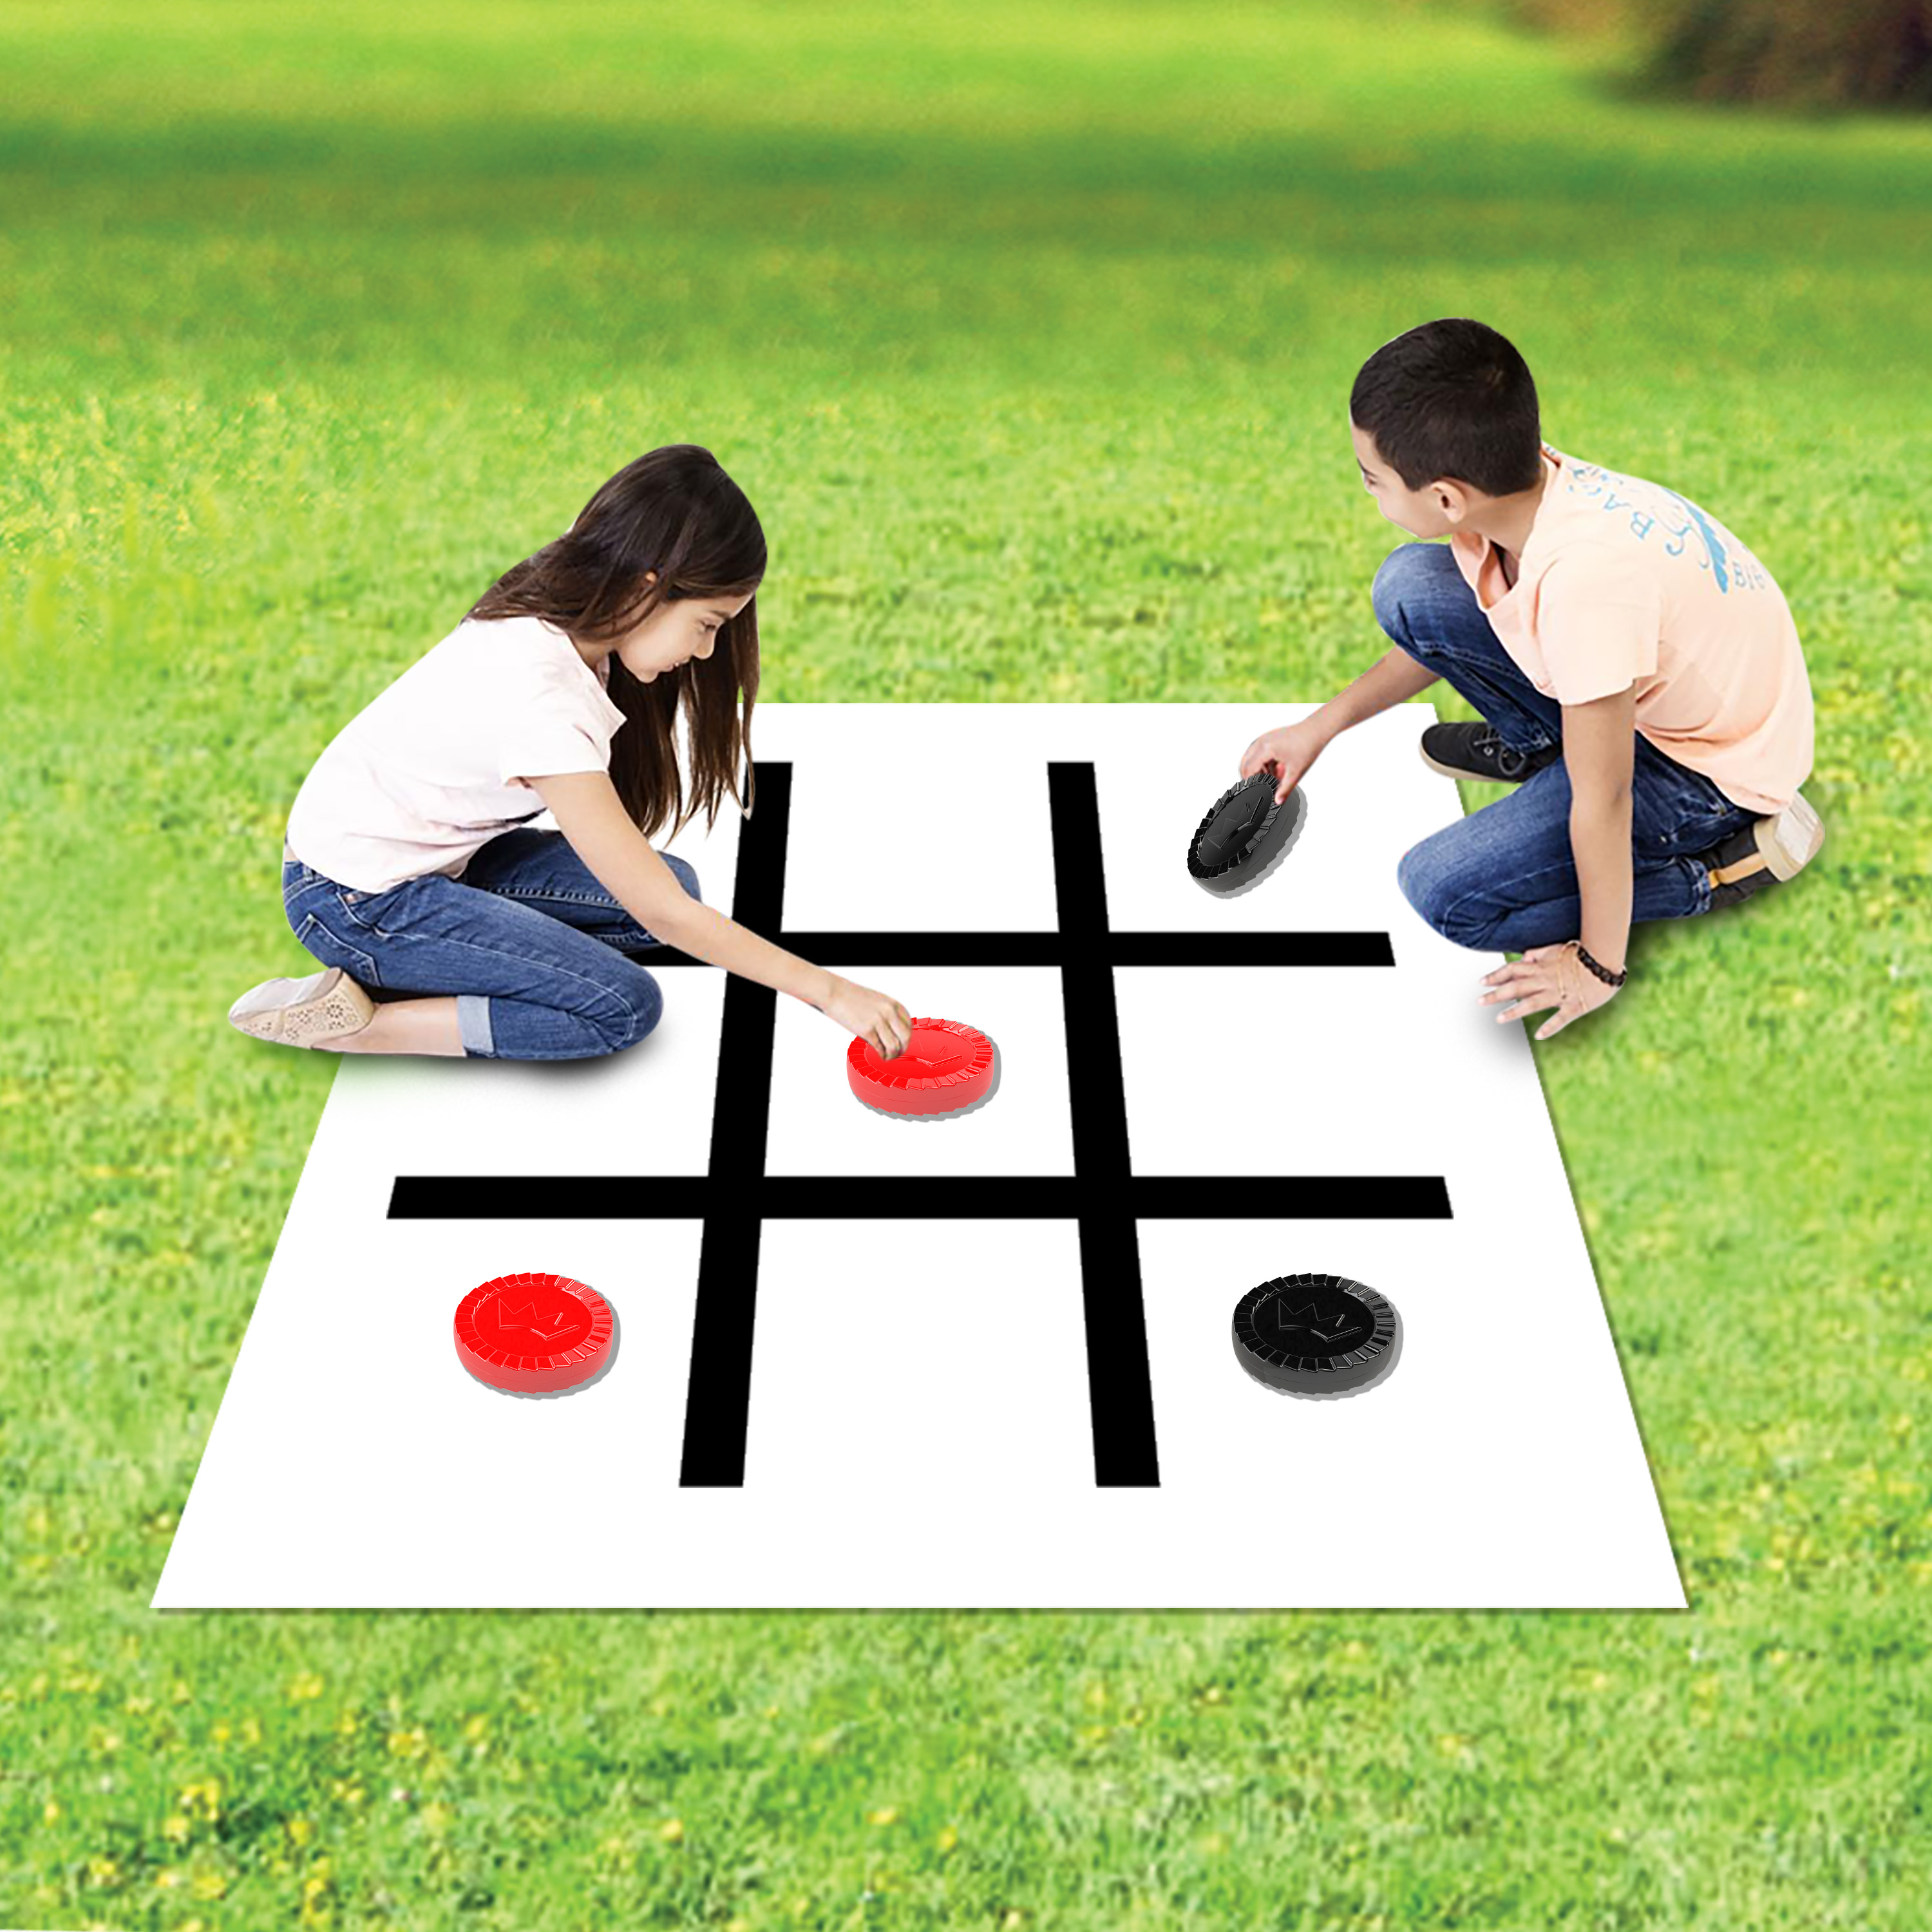 Play Day Jumbo Checkers Classic Game Set - image 5 of 5